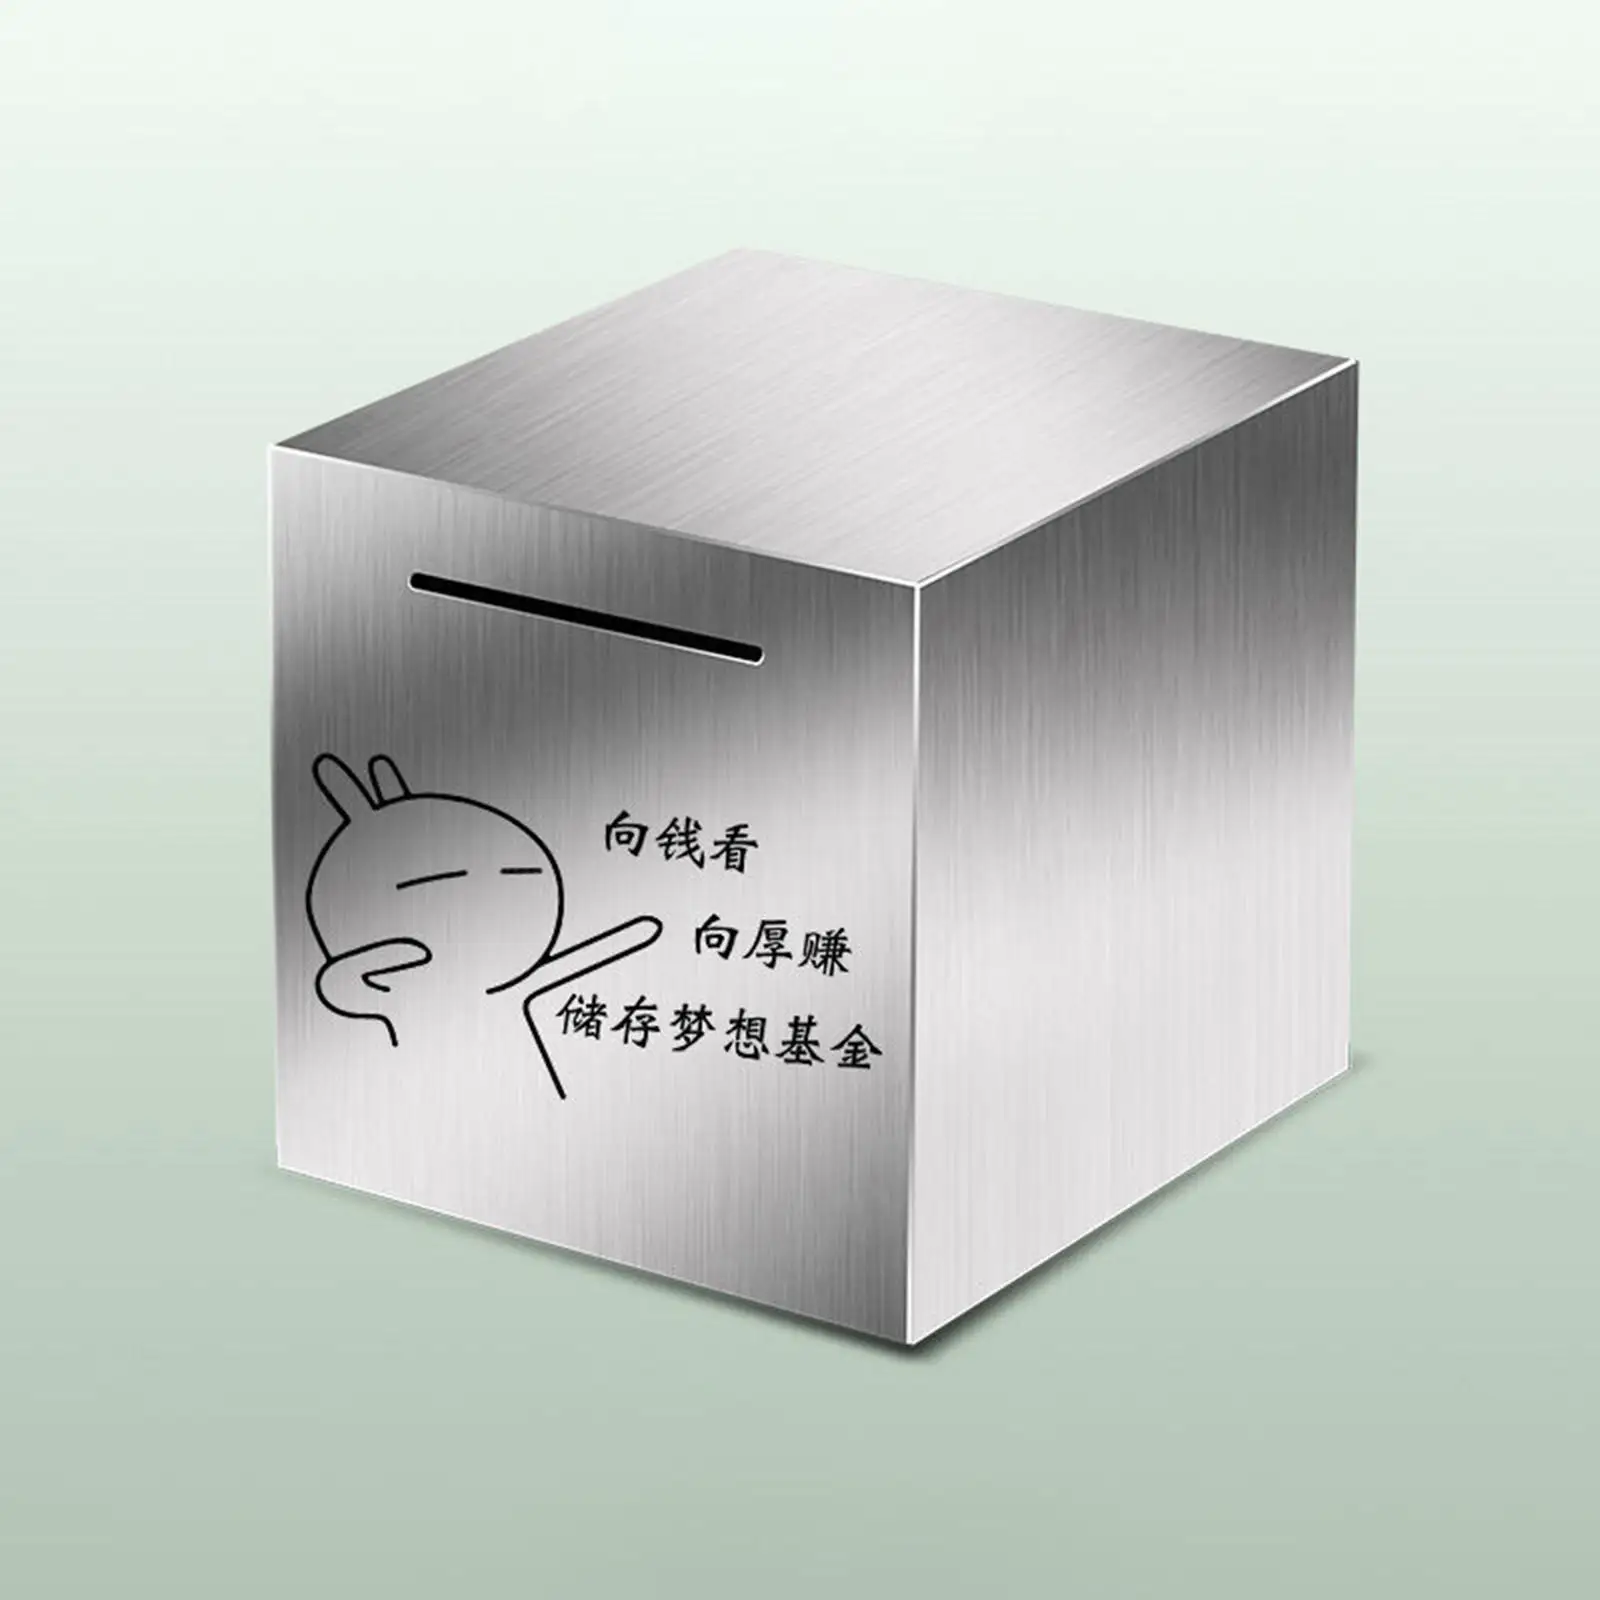 Piggy Bank Equipment Centerpiece Durable Portable Deposit Box Gifts for Money Children Desktop Thanksgiving Christmas